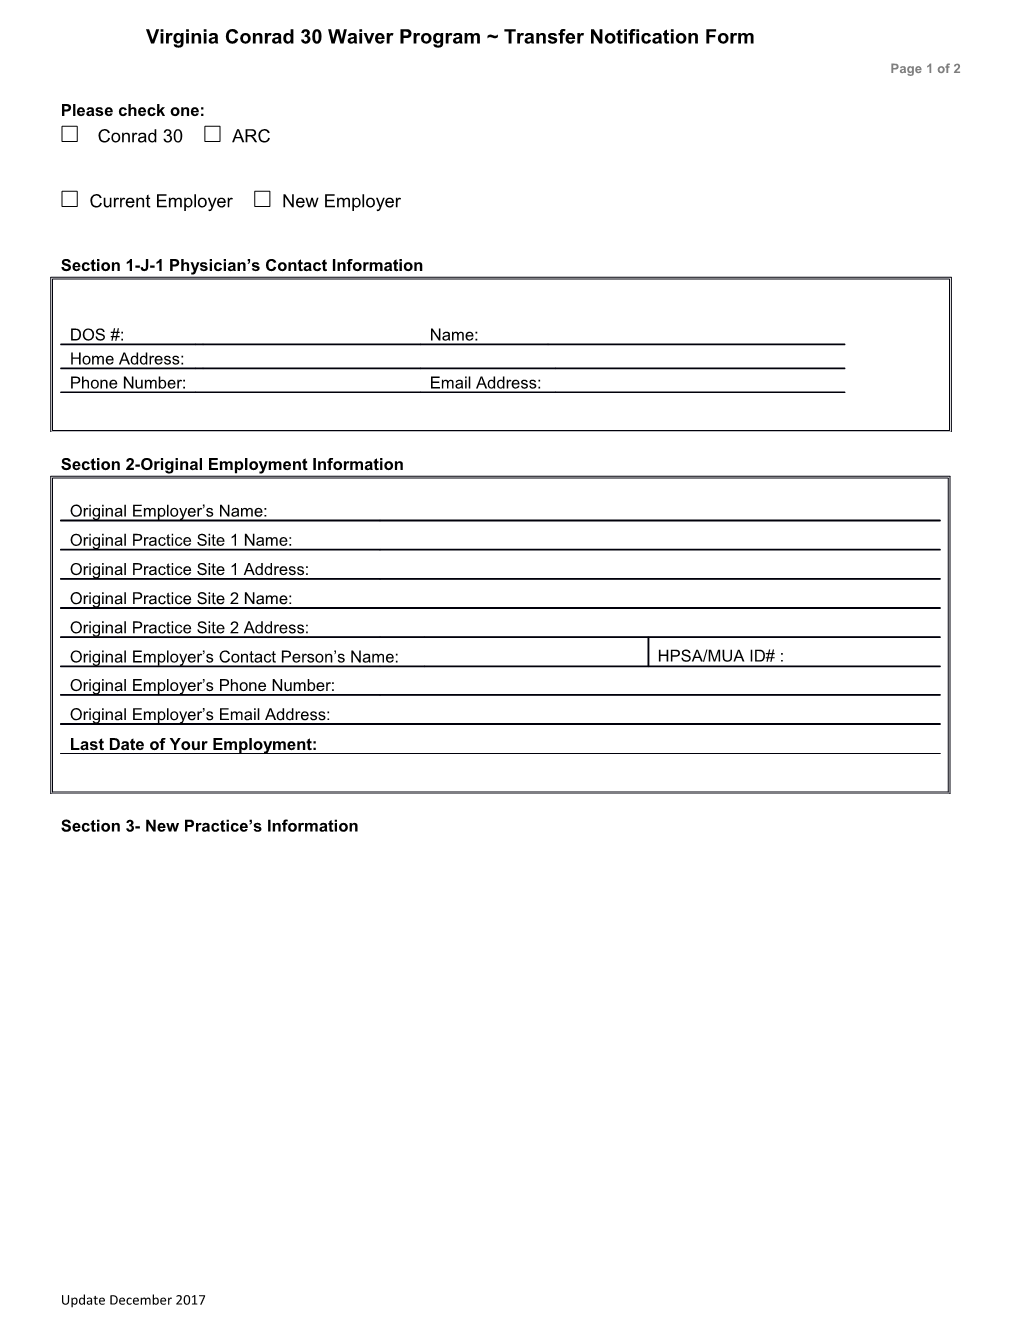 Virginia Conrad 30 Waiver Program Transfer Notification Form